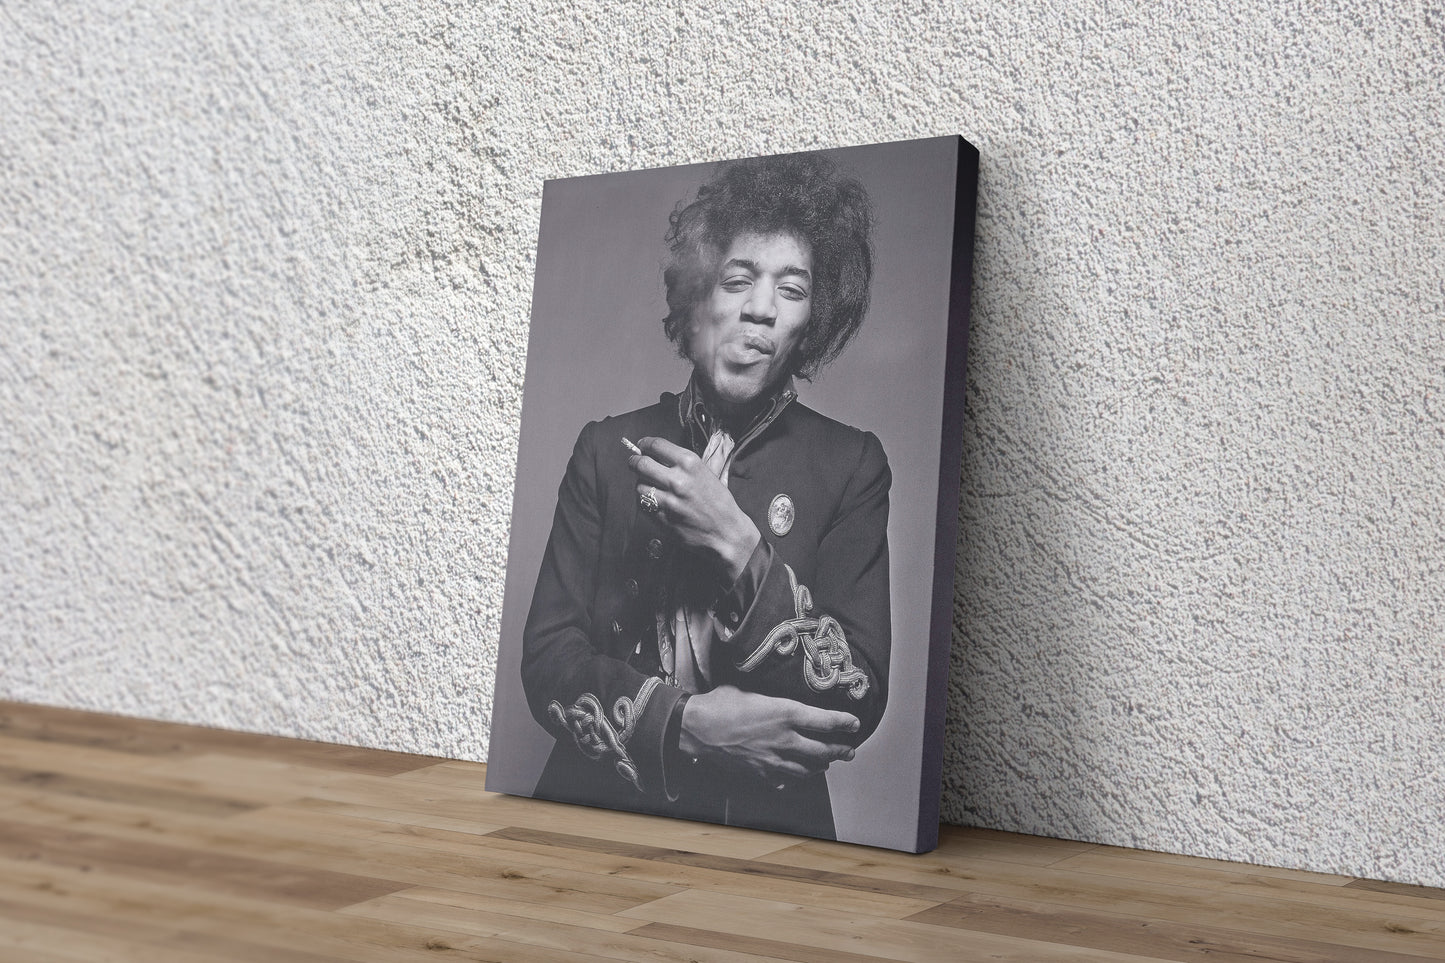 Jimi Hendrix Poster Guitarist Singer Smoking Hand Made Posters Canvas Print Wall Art Home Decor